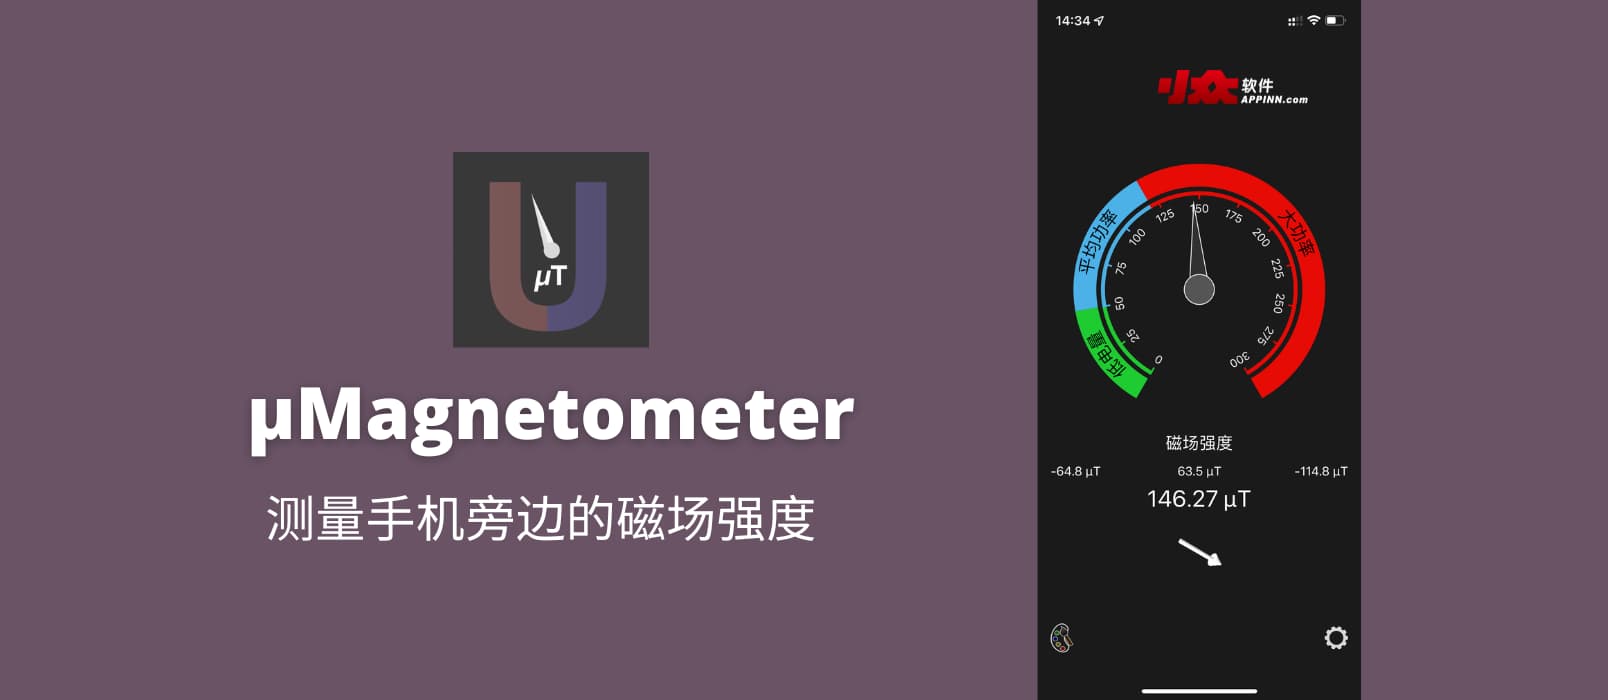 µMagnetometer - 磁力计，测量手机旁边的磁场强度[iPhone]